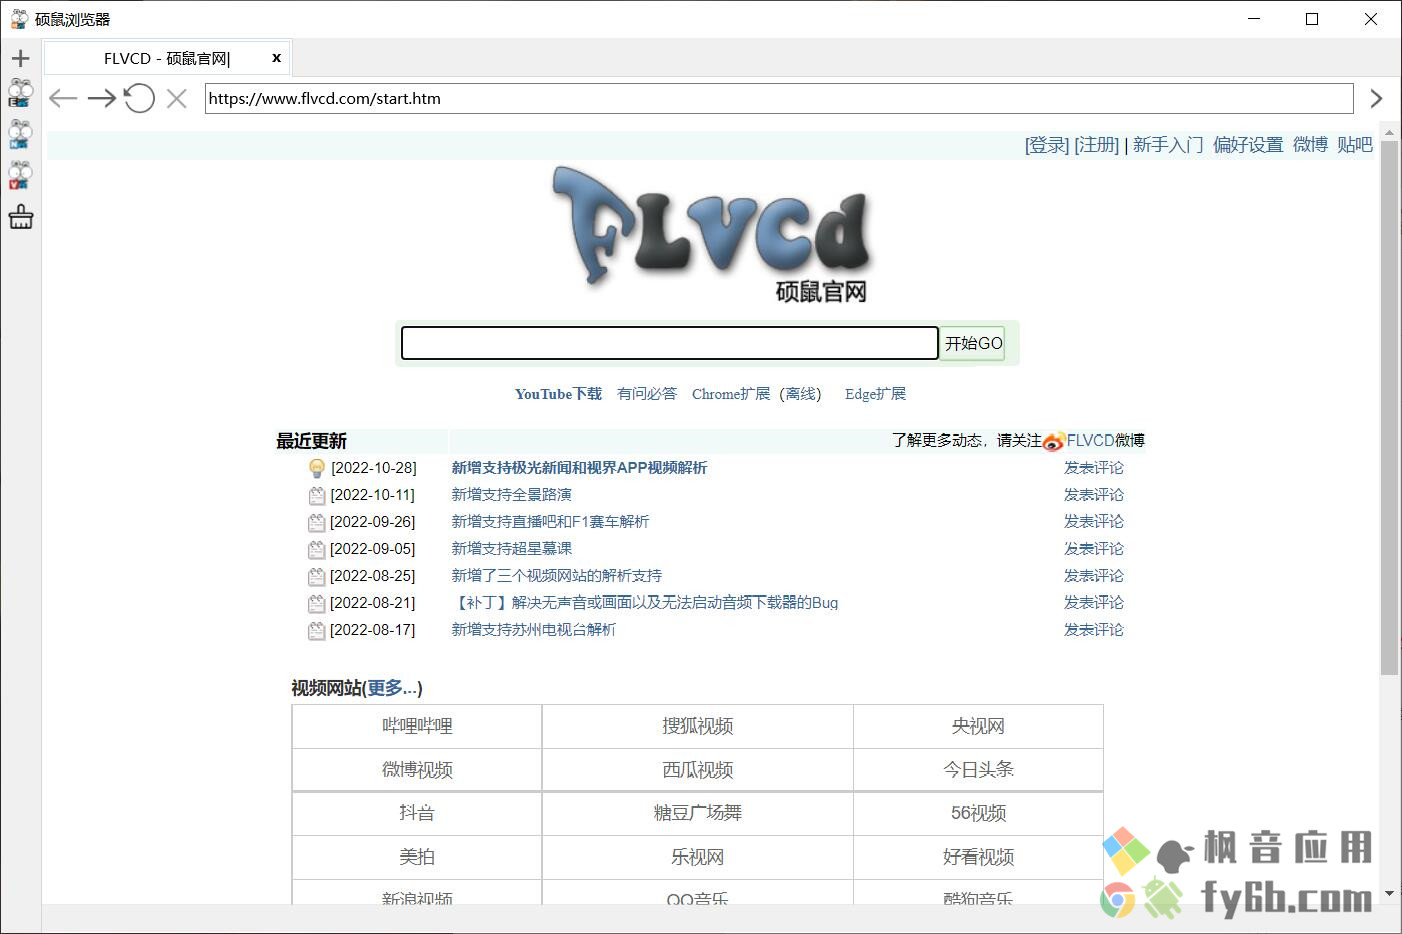 Windows FLVCD 硕鼠 下载器_v0.4.9.3 正式版